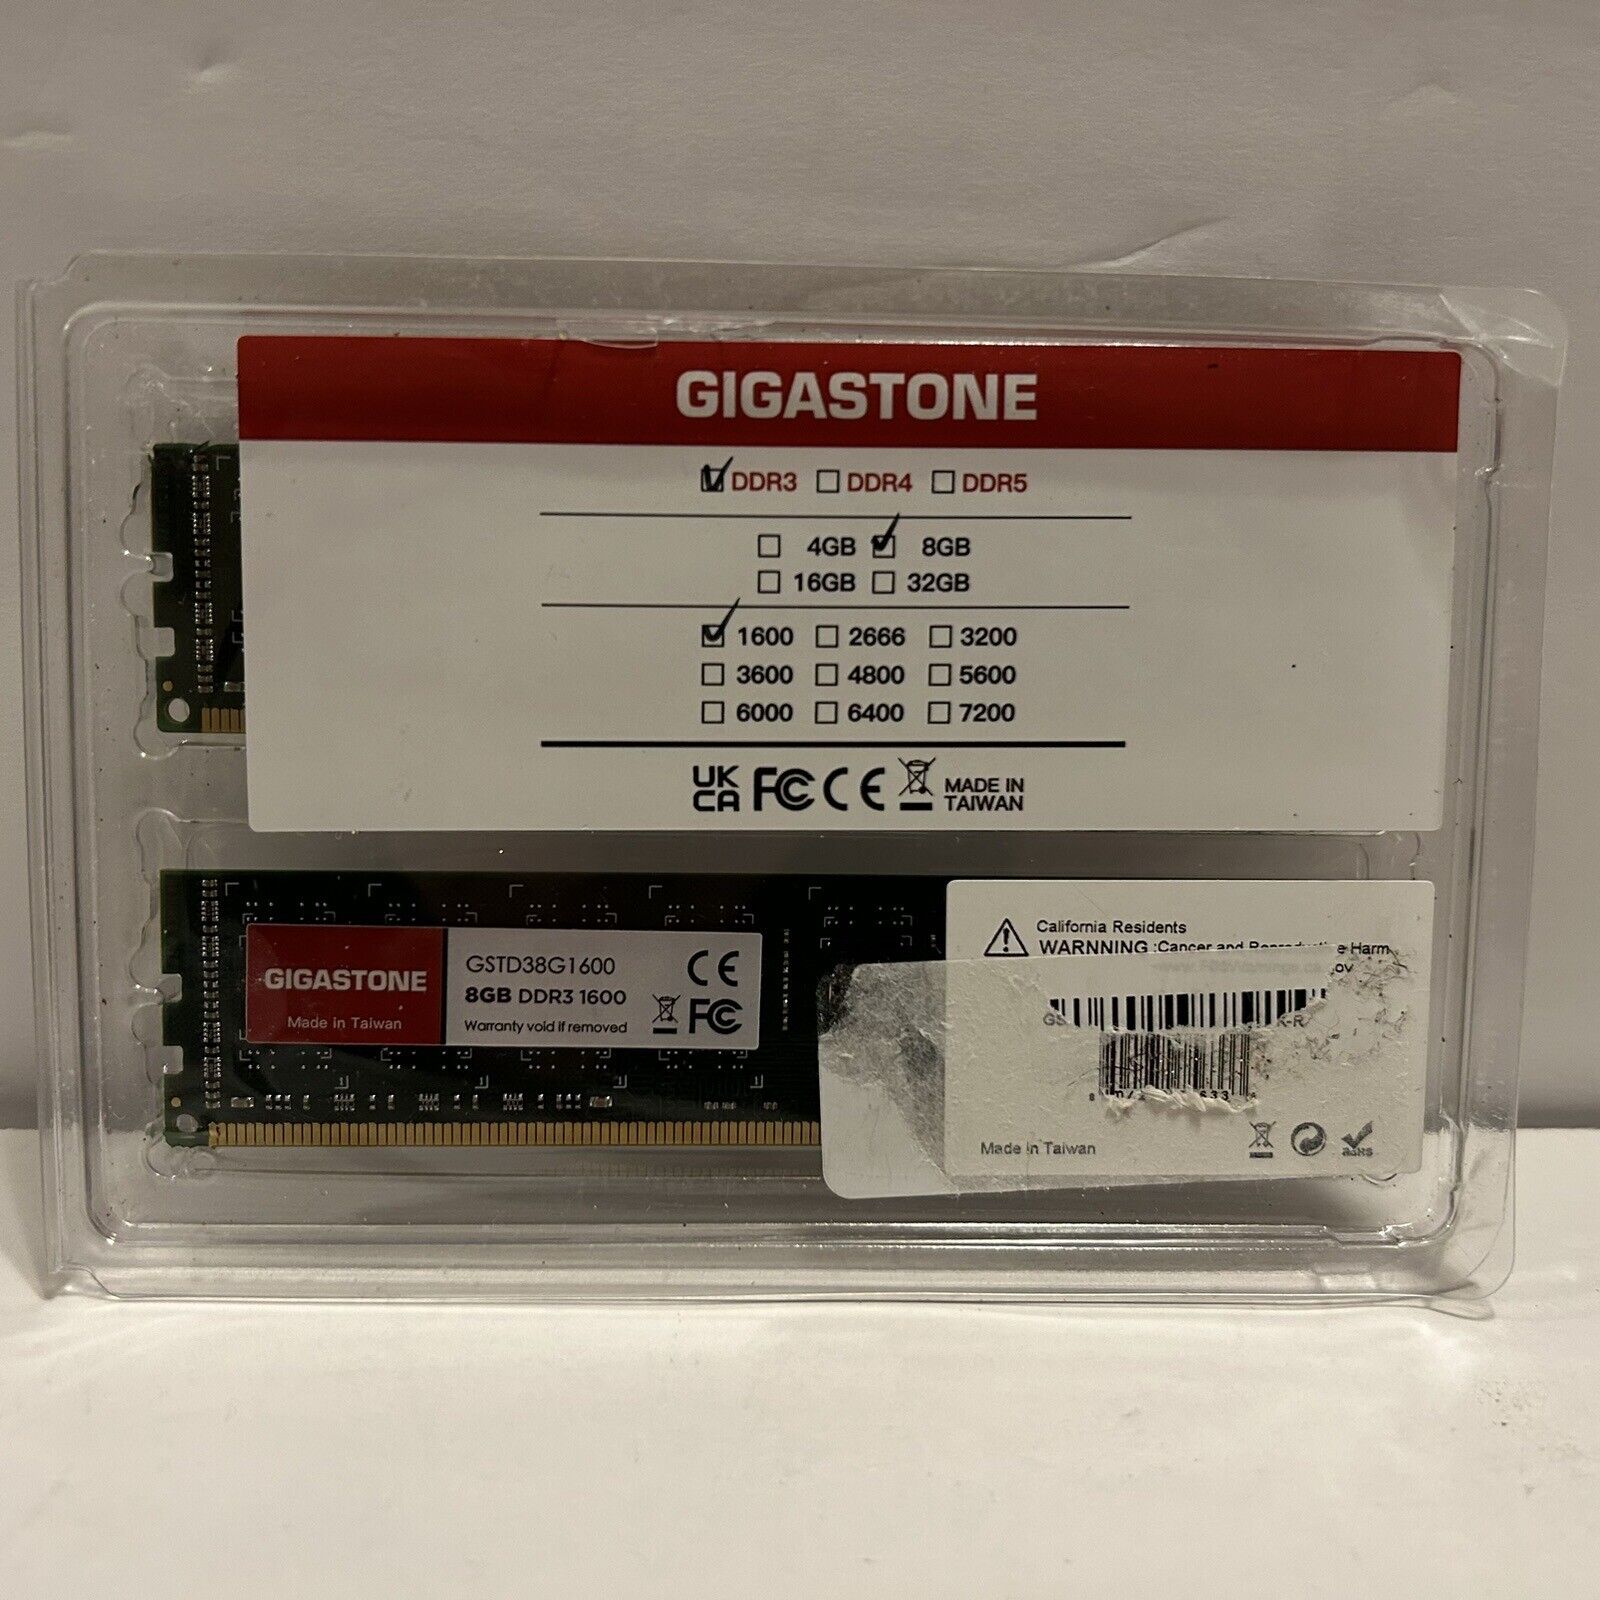 Gigastone GSTD38G1600 (2 x 8GB) DDR3 1600 Desktop Memory RAM